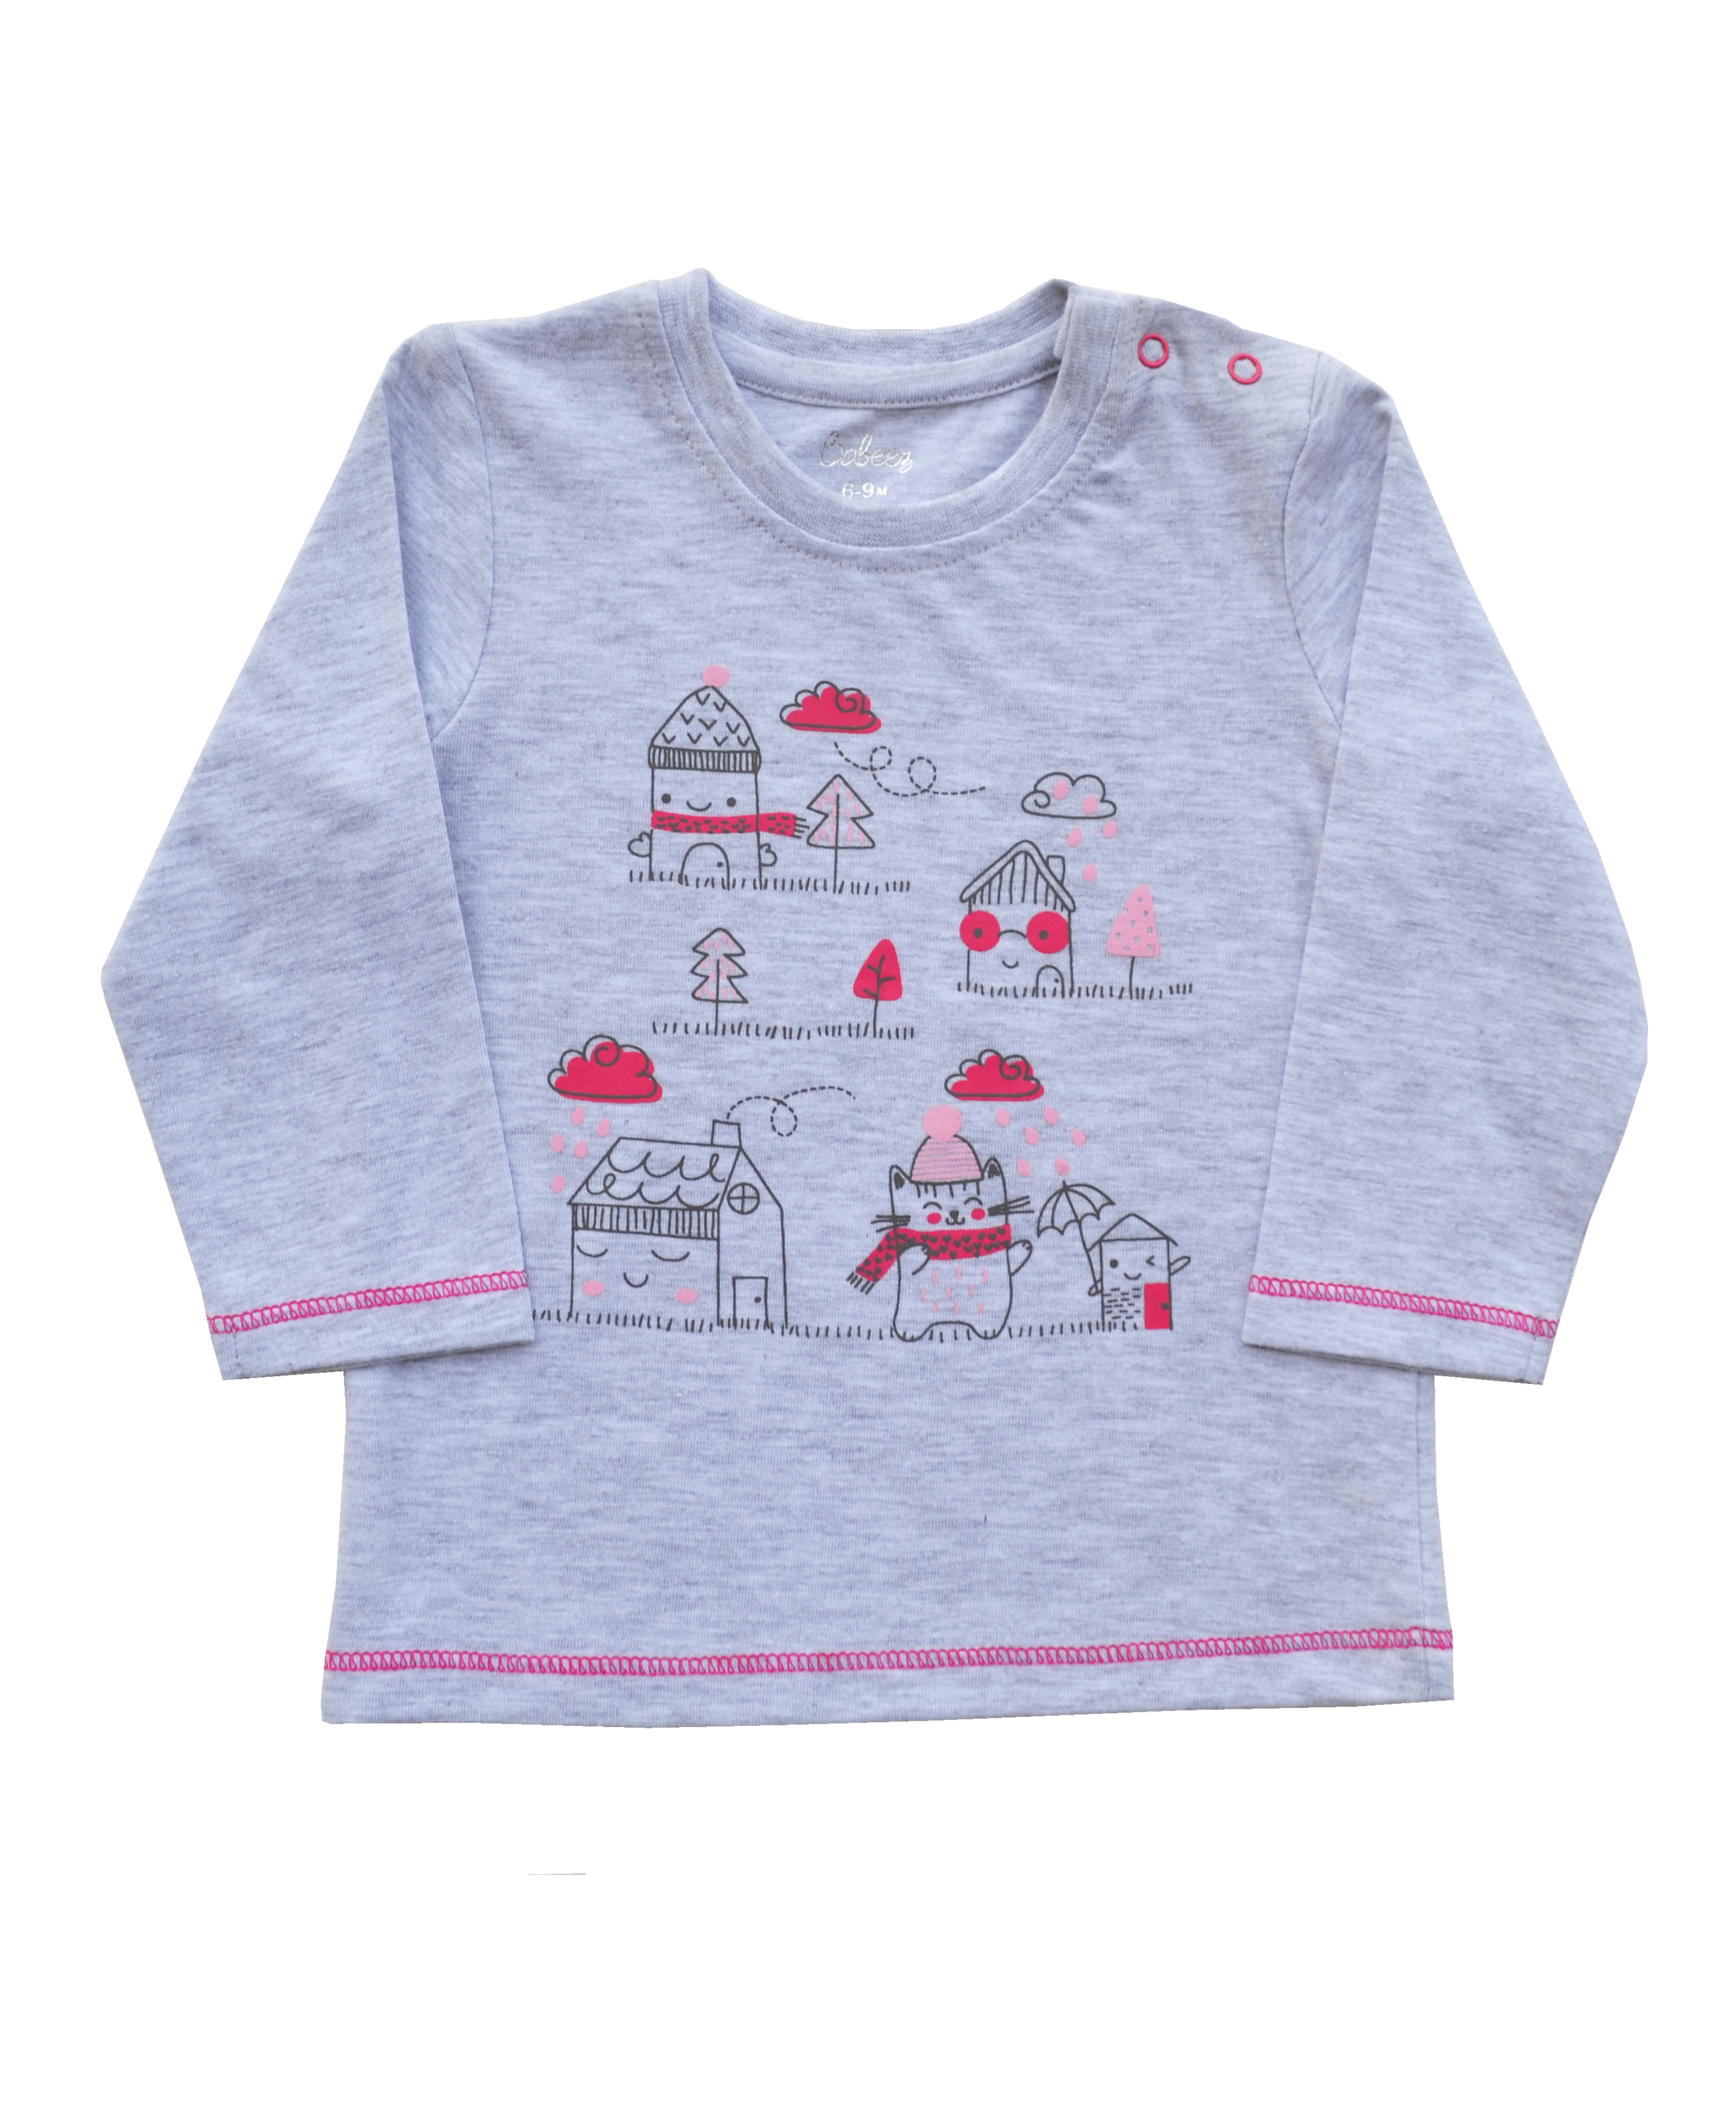 Pink House Print on Grey melange Long Sleeve T-Shirt (100% Cotton Single Jersey)